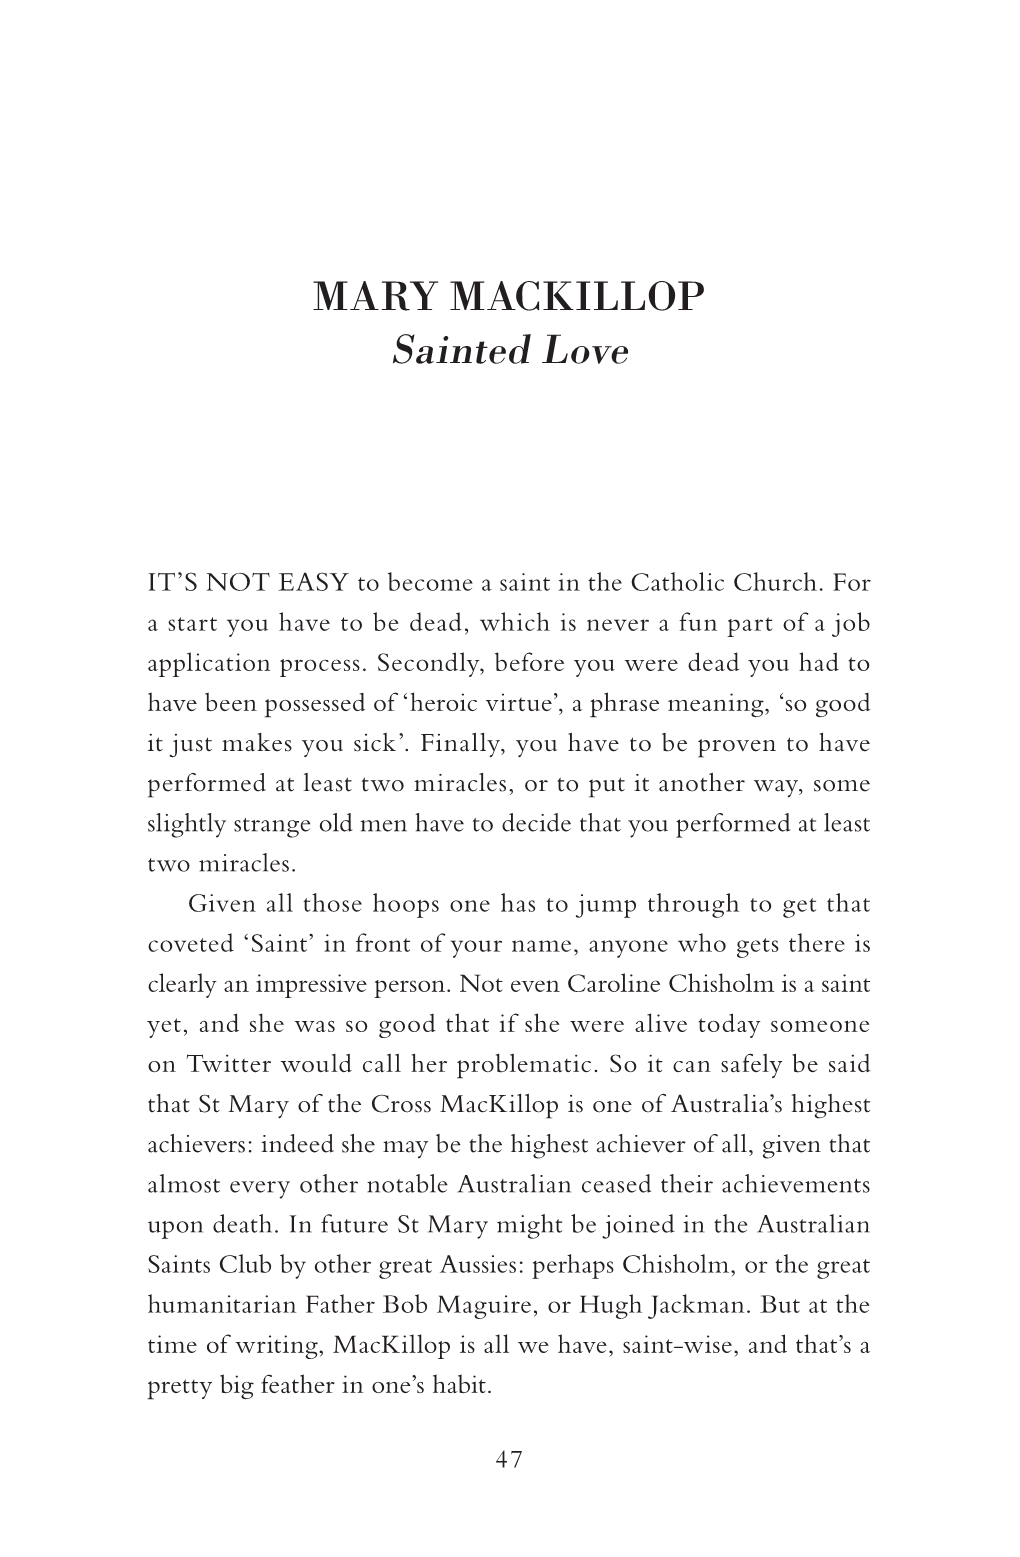 MARY MACKILLOP Sainted Love